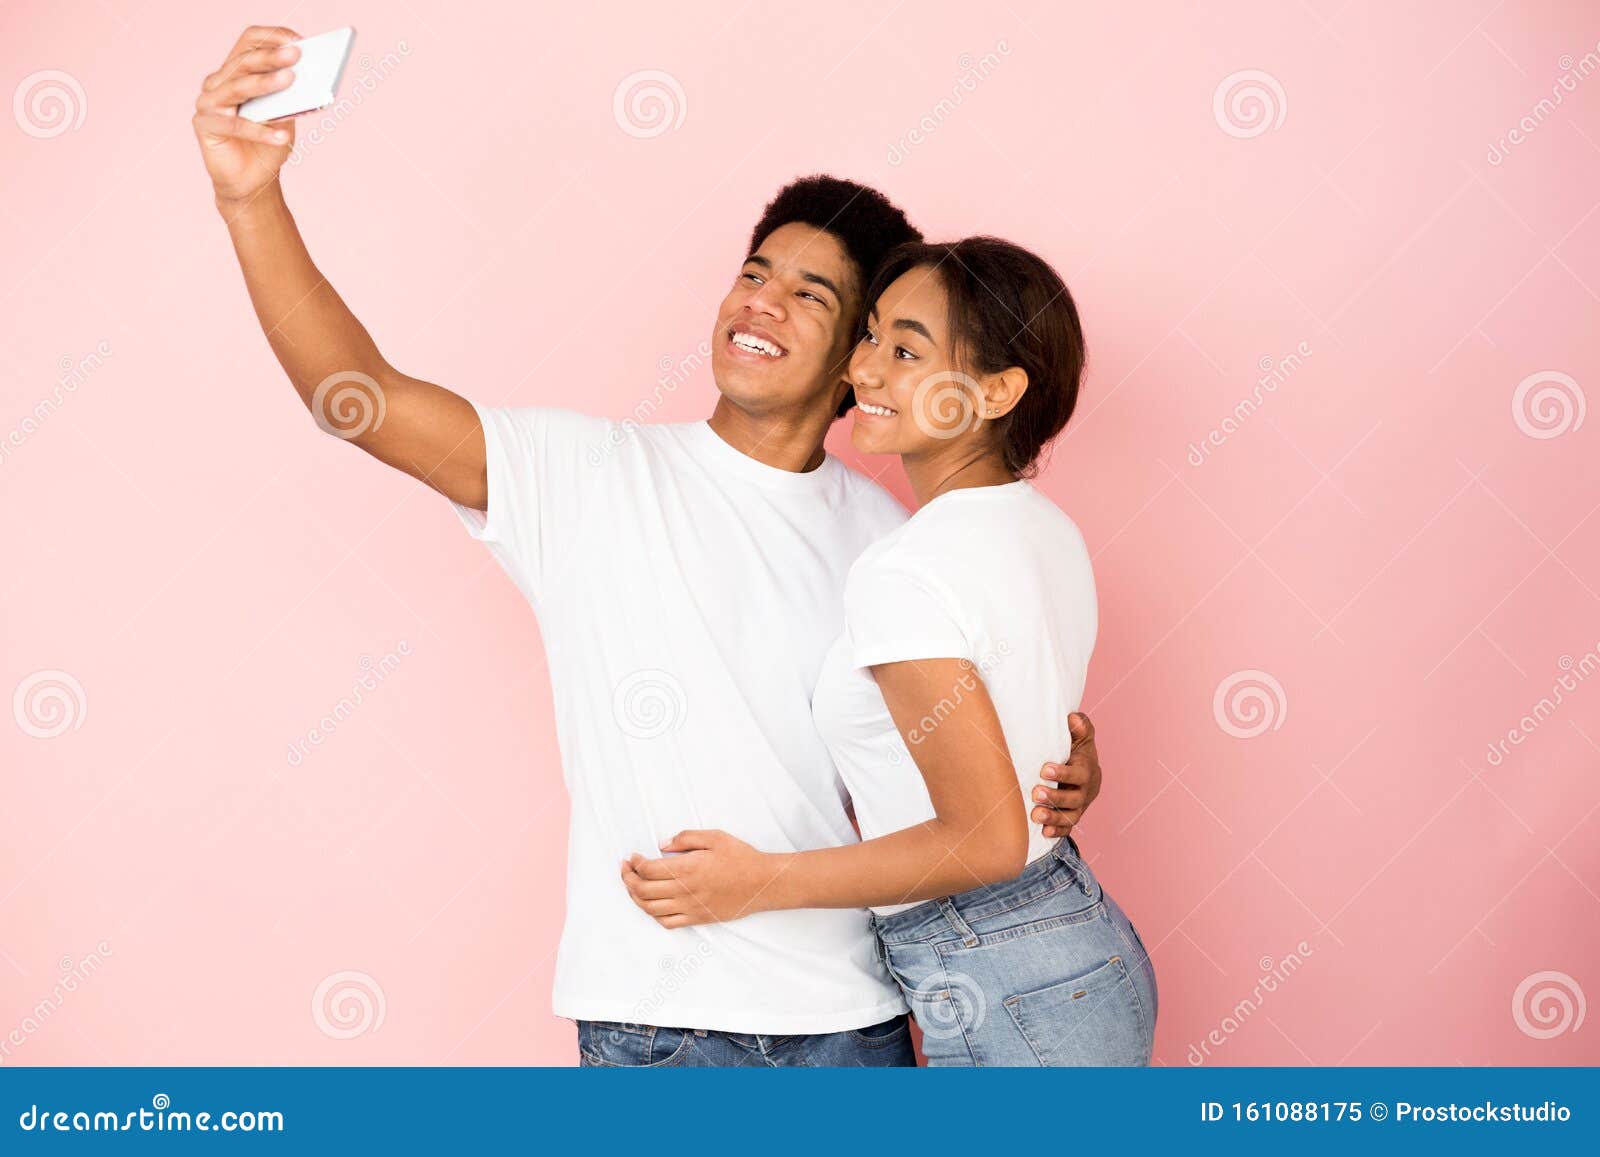 Teen Couple In Love Making Selfie On Smartphone Stock Image Im